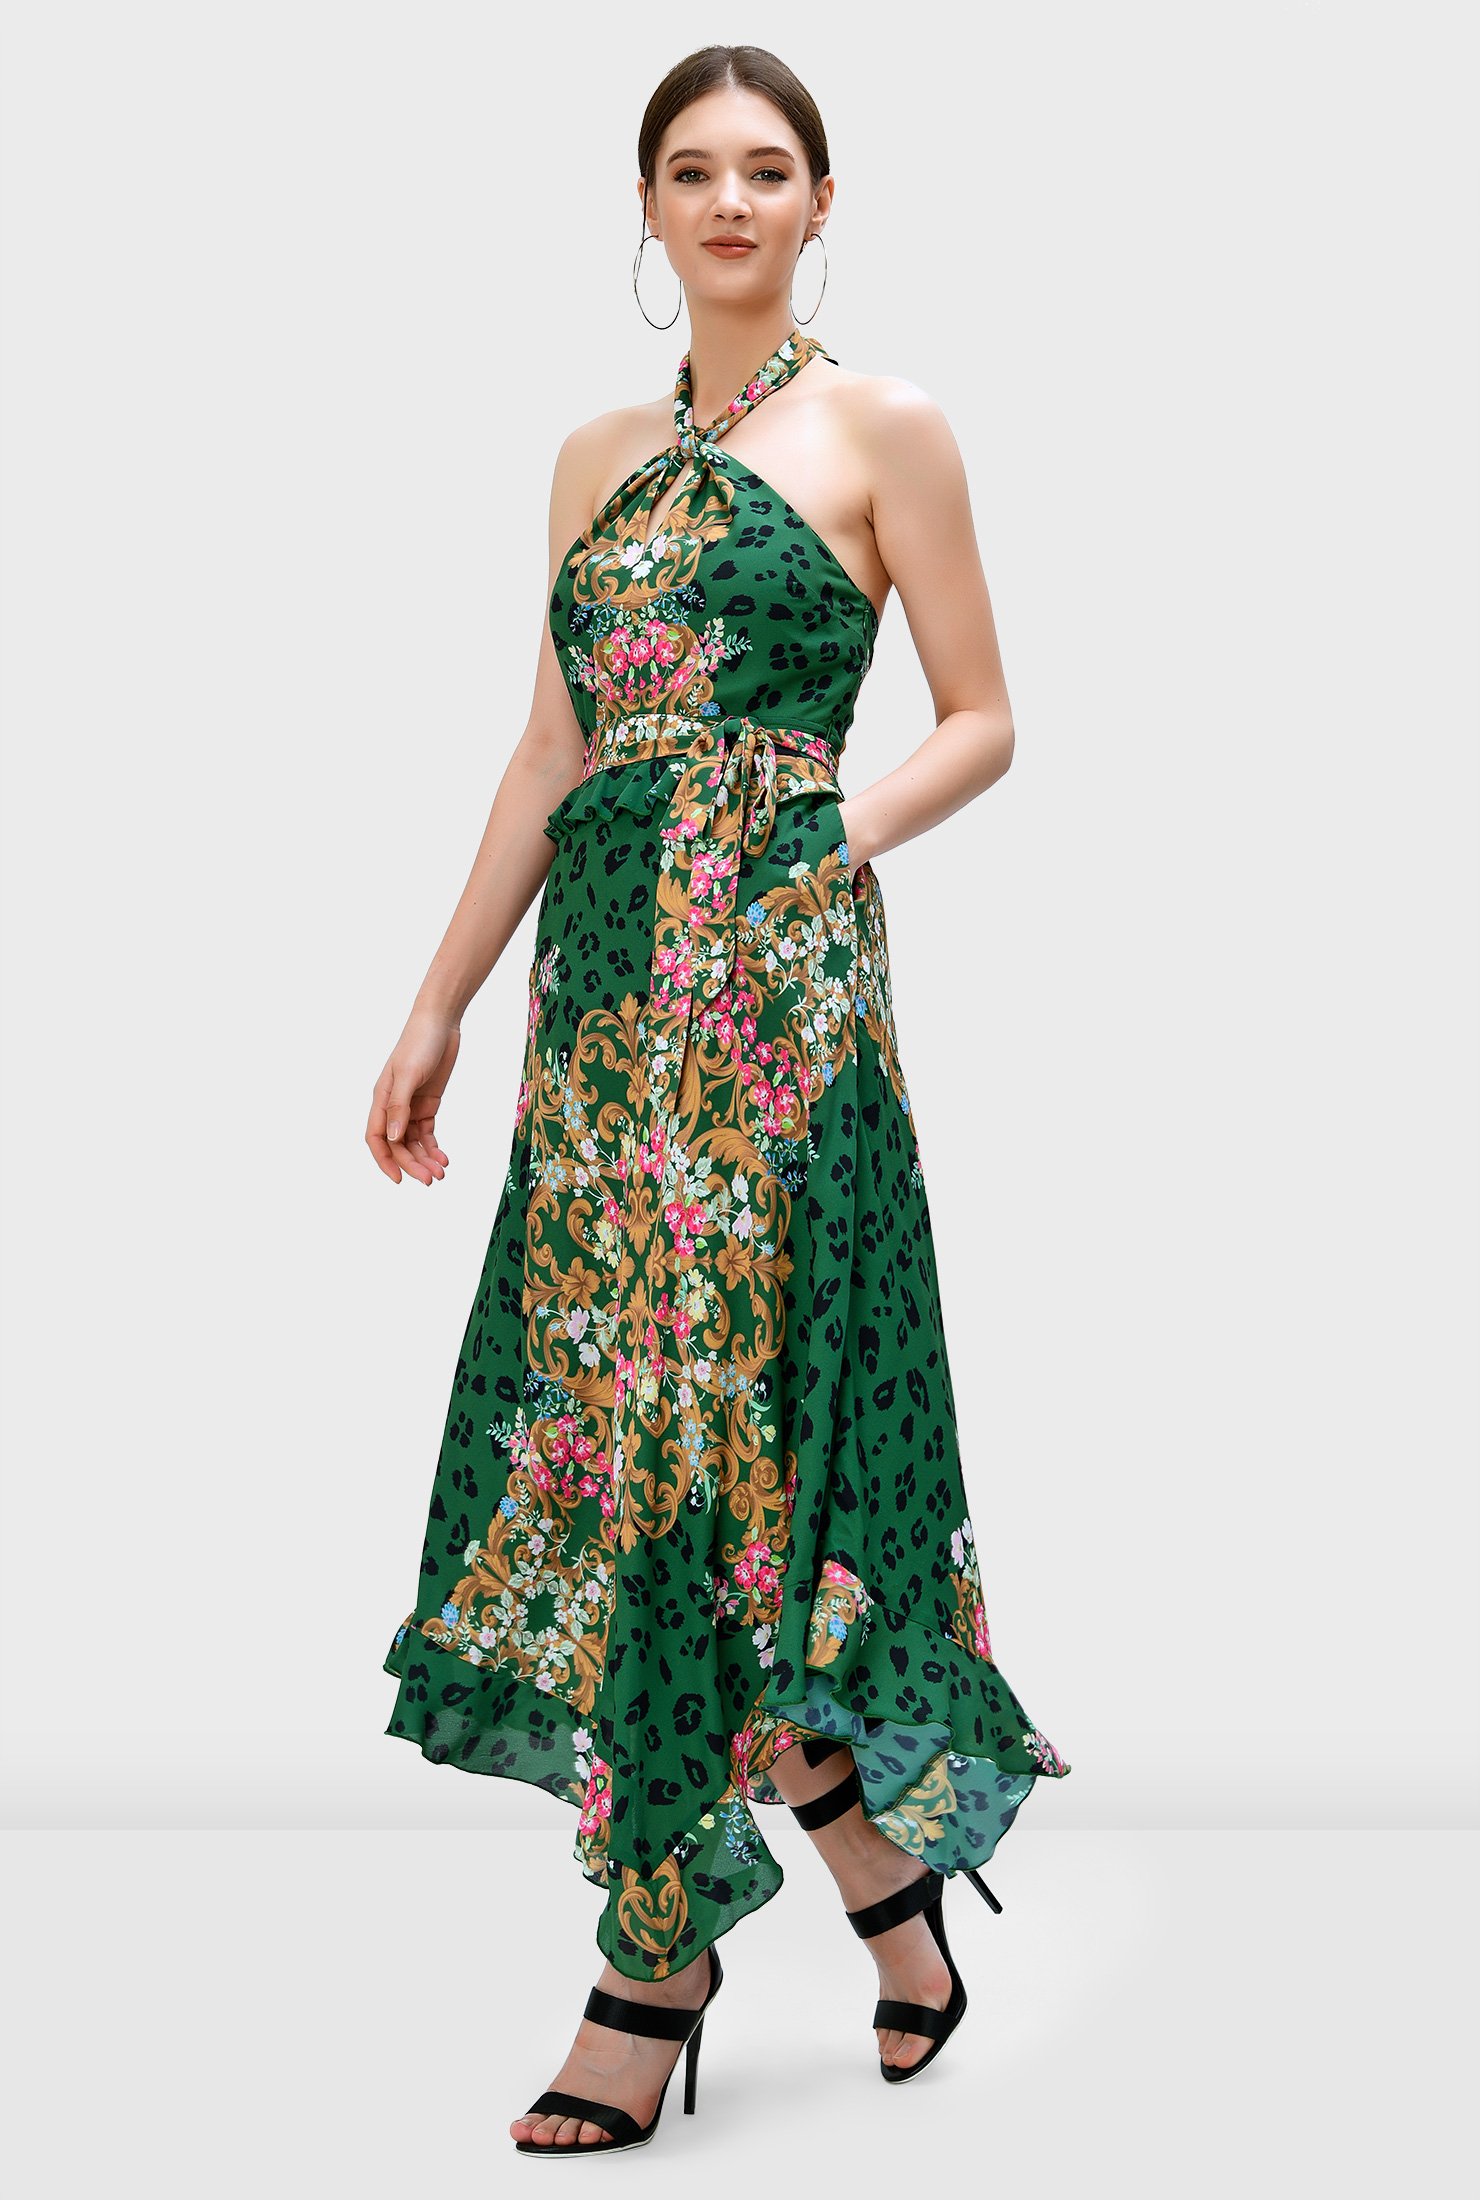 OAKITA women's dresses Scarf Print Halter Neck Dress